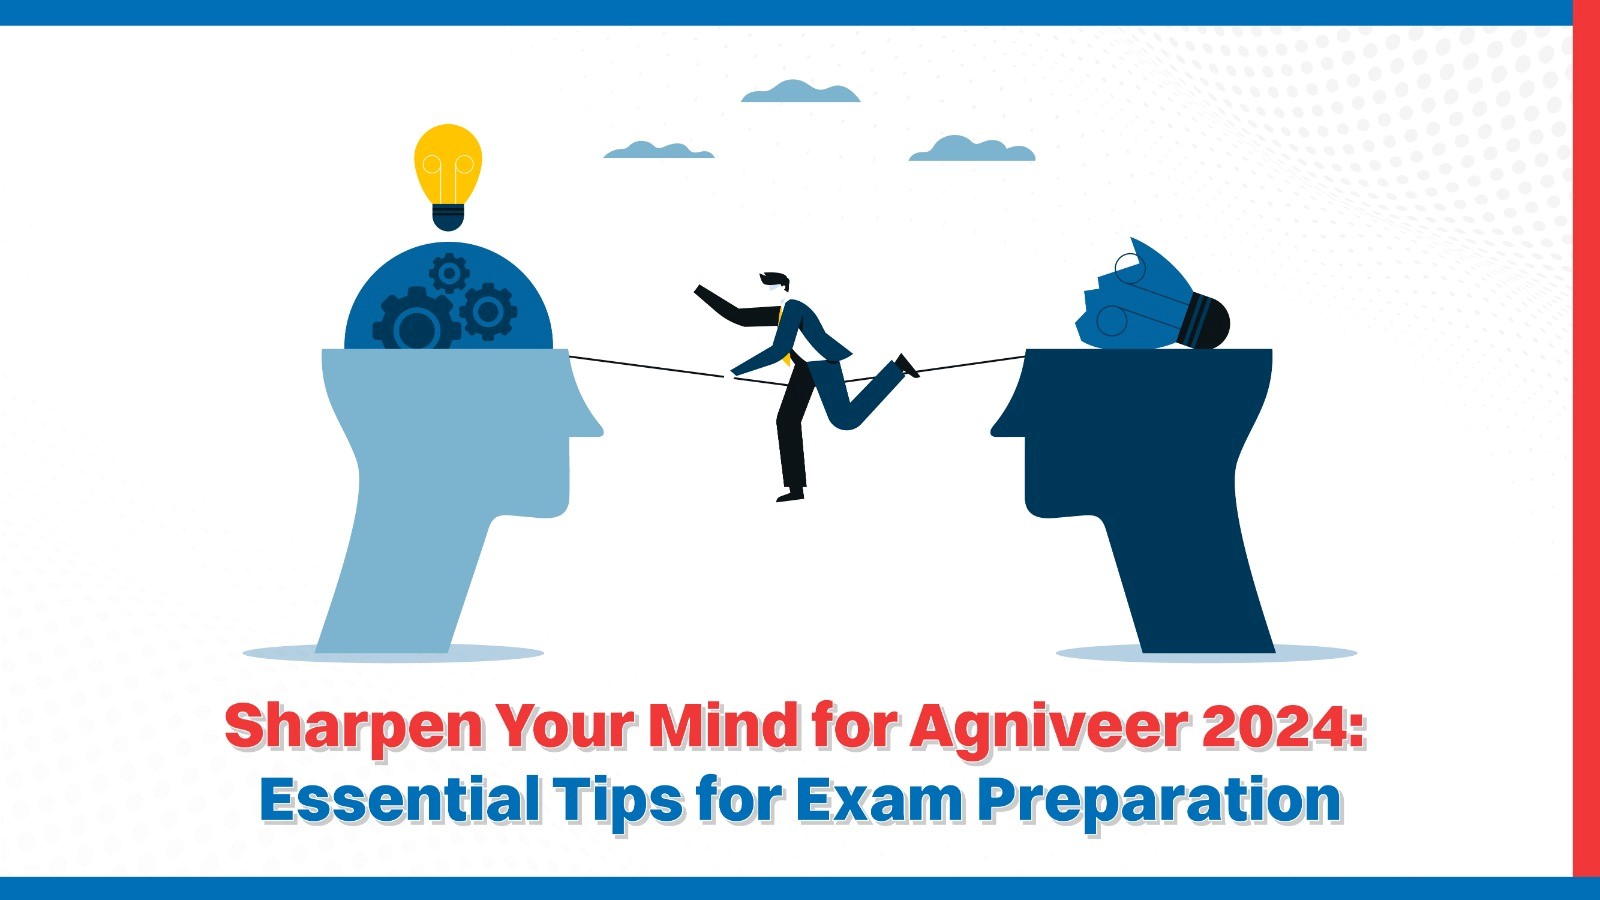 Sharpen Your Mind for Agniveer 2024 Essential Tips for Exam Preparation.jpg